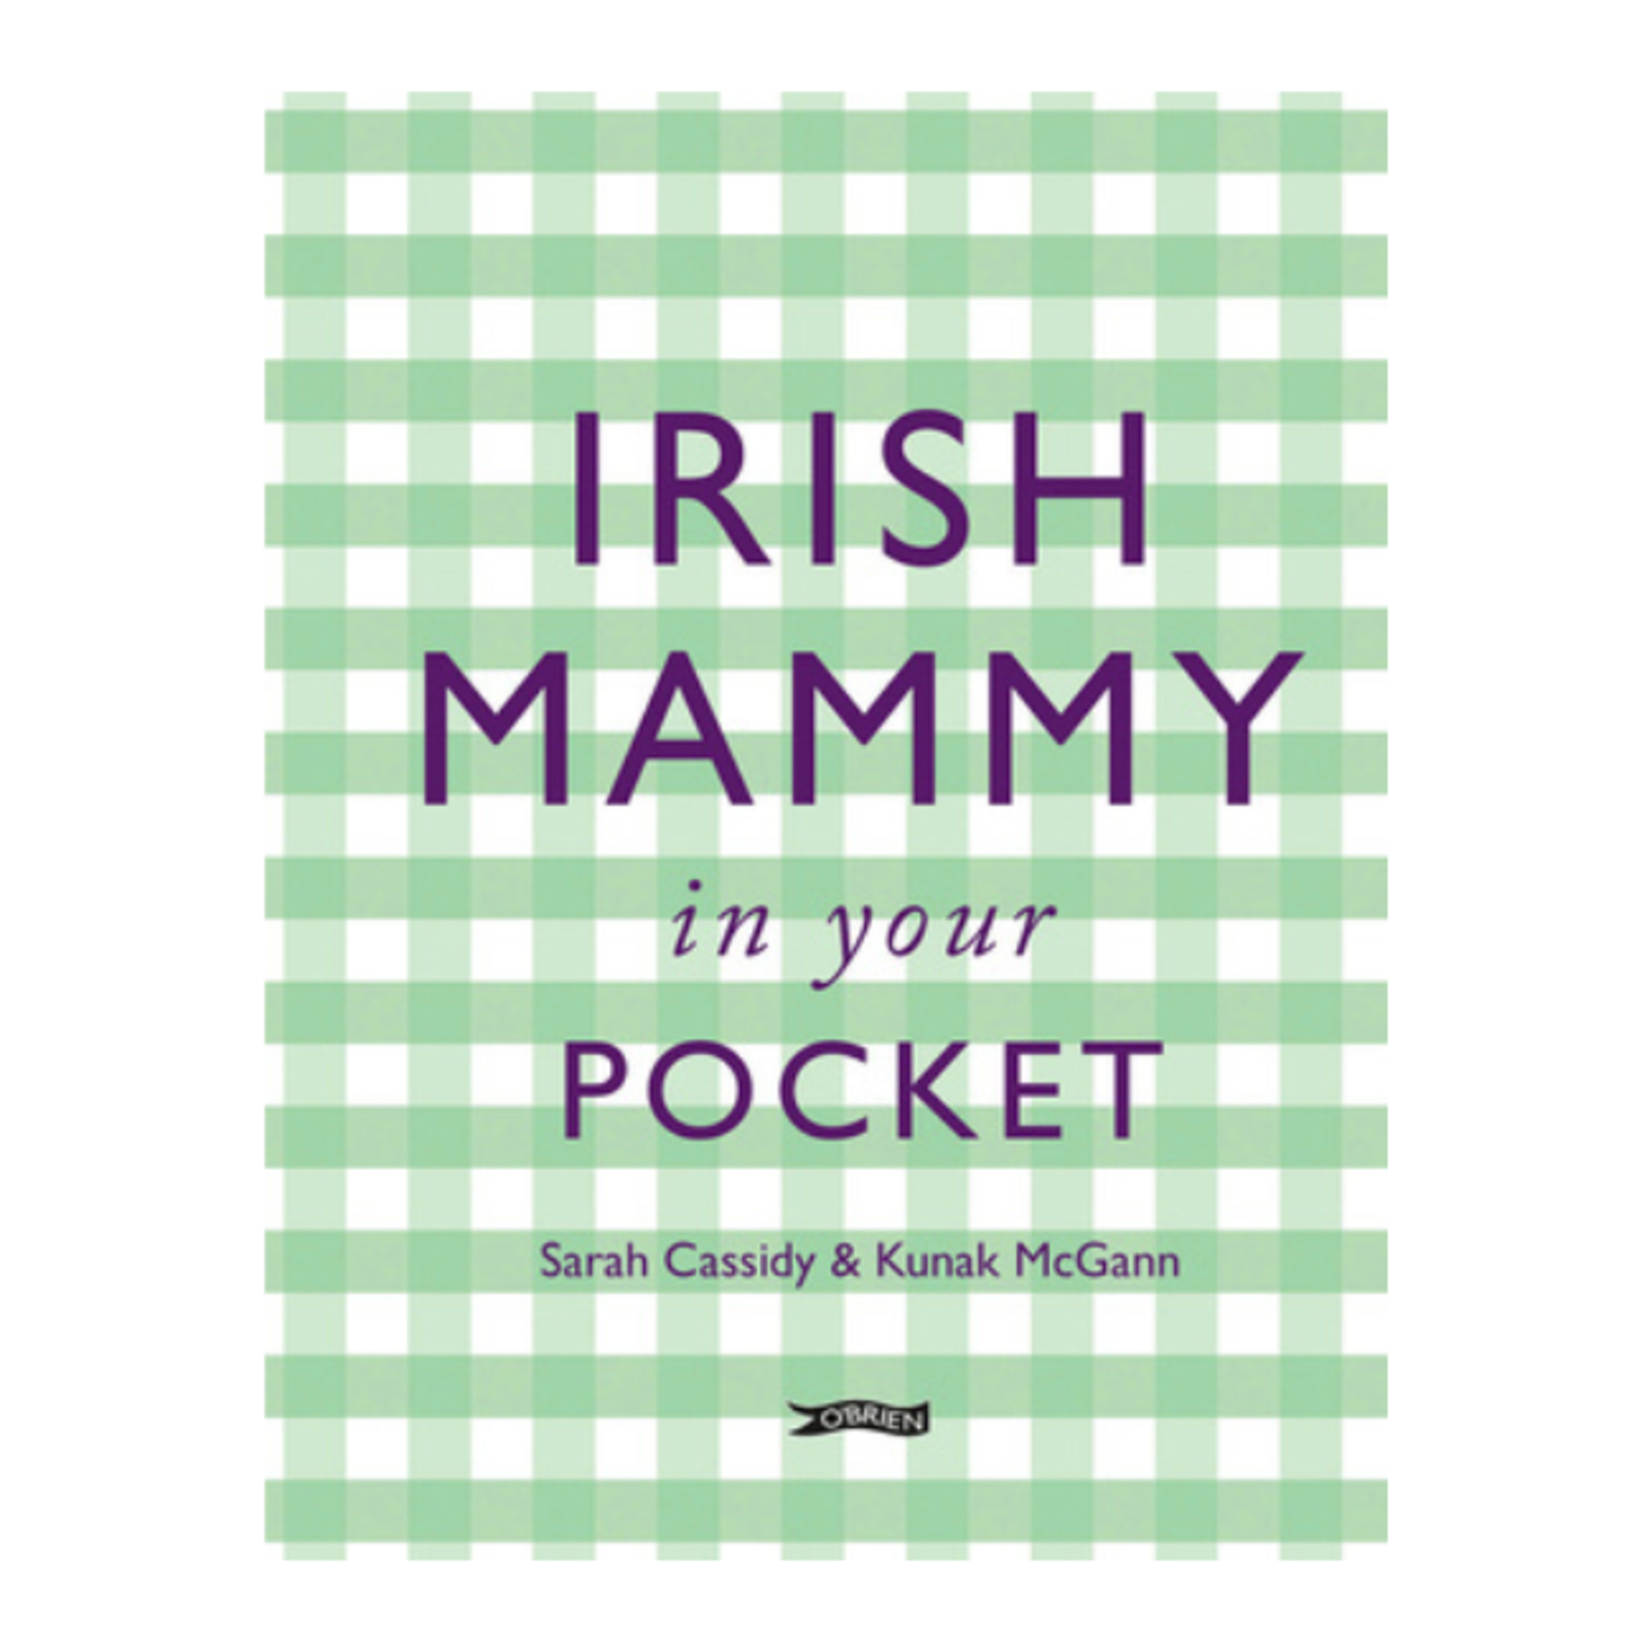 Celtic Books "Irish Mammy in Your Pocket"